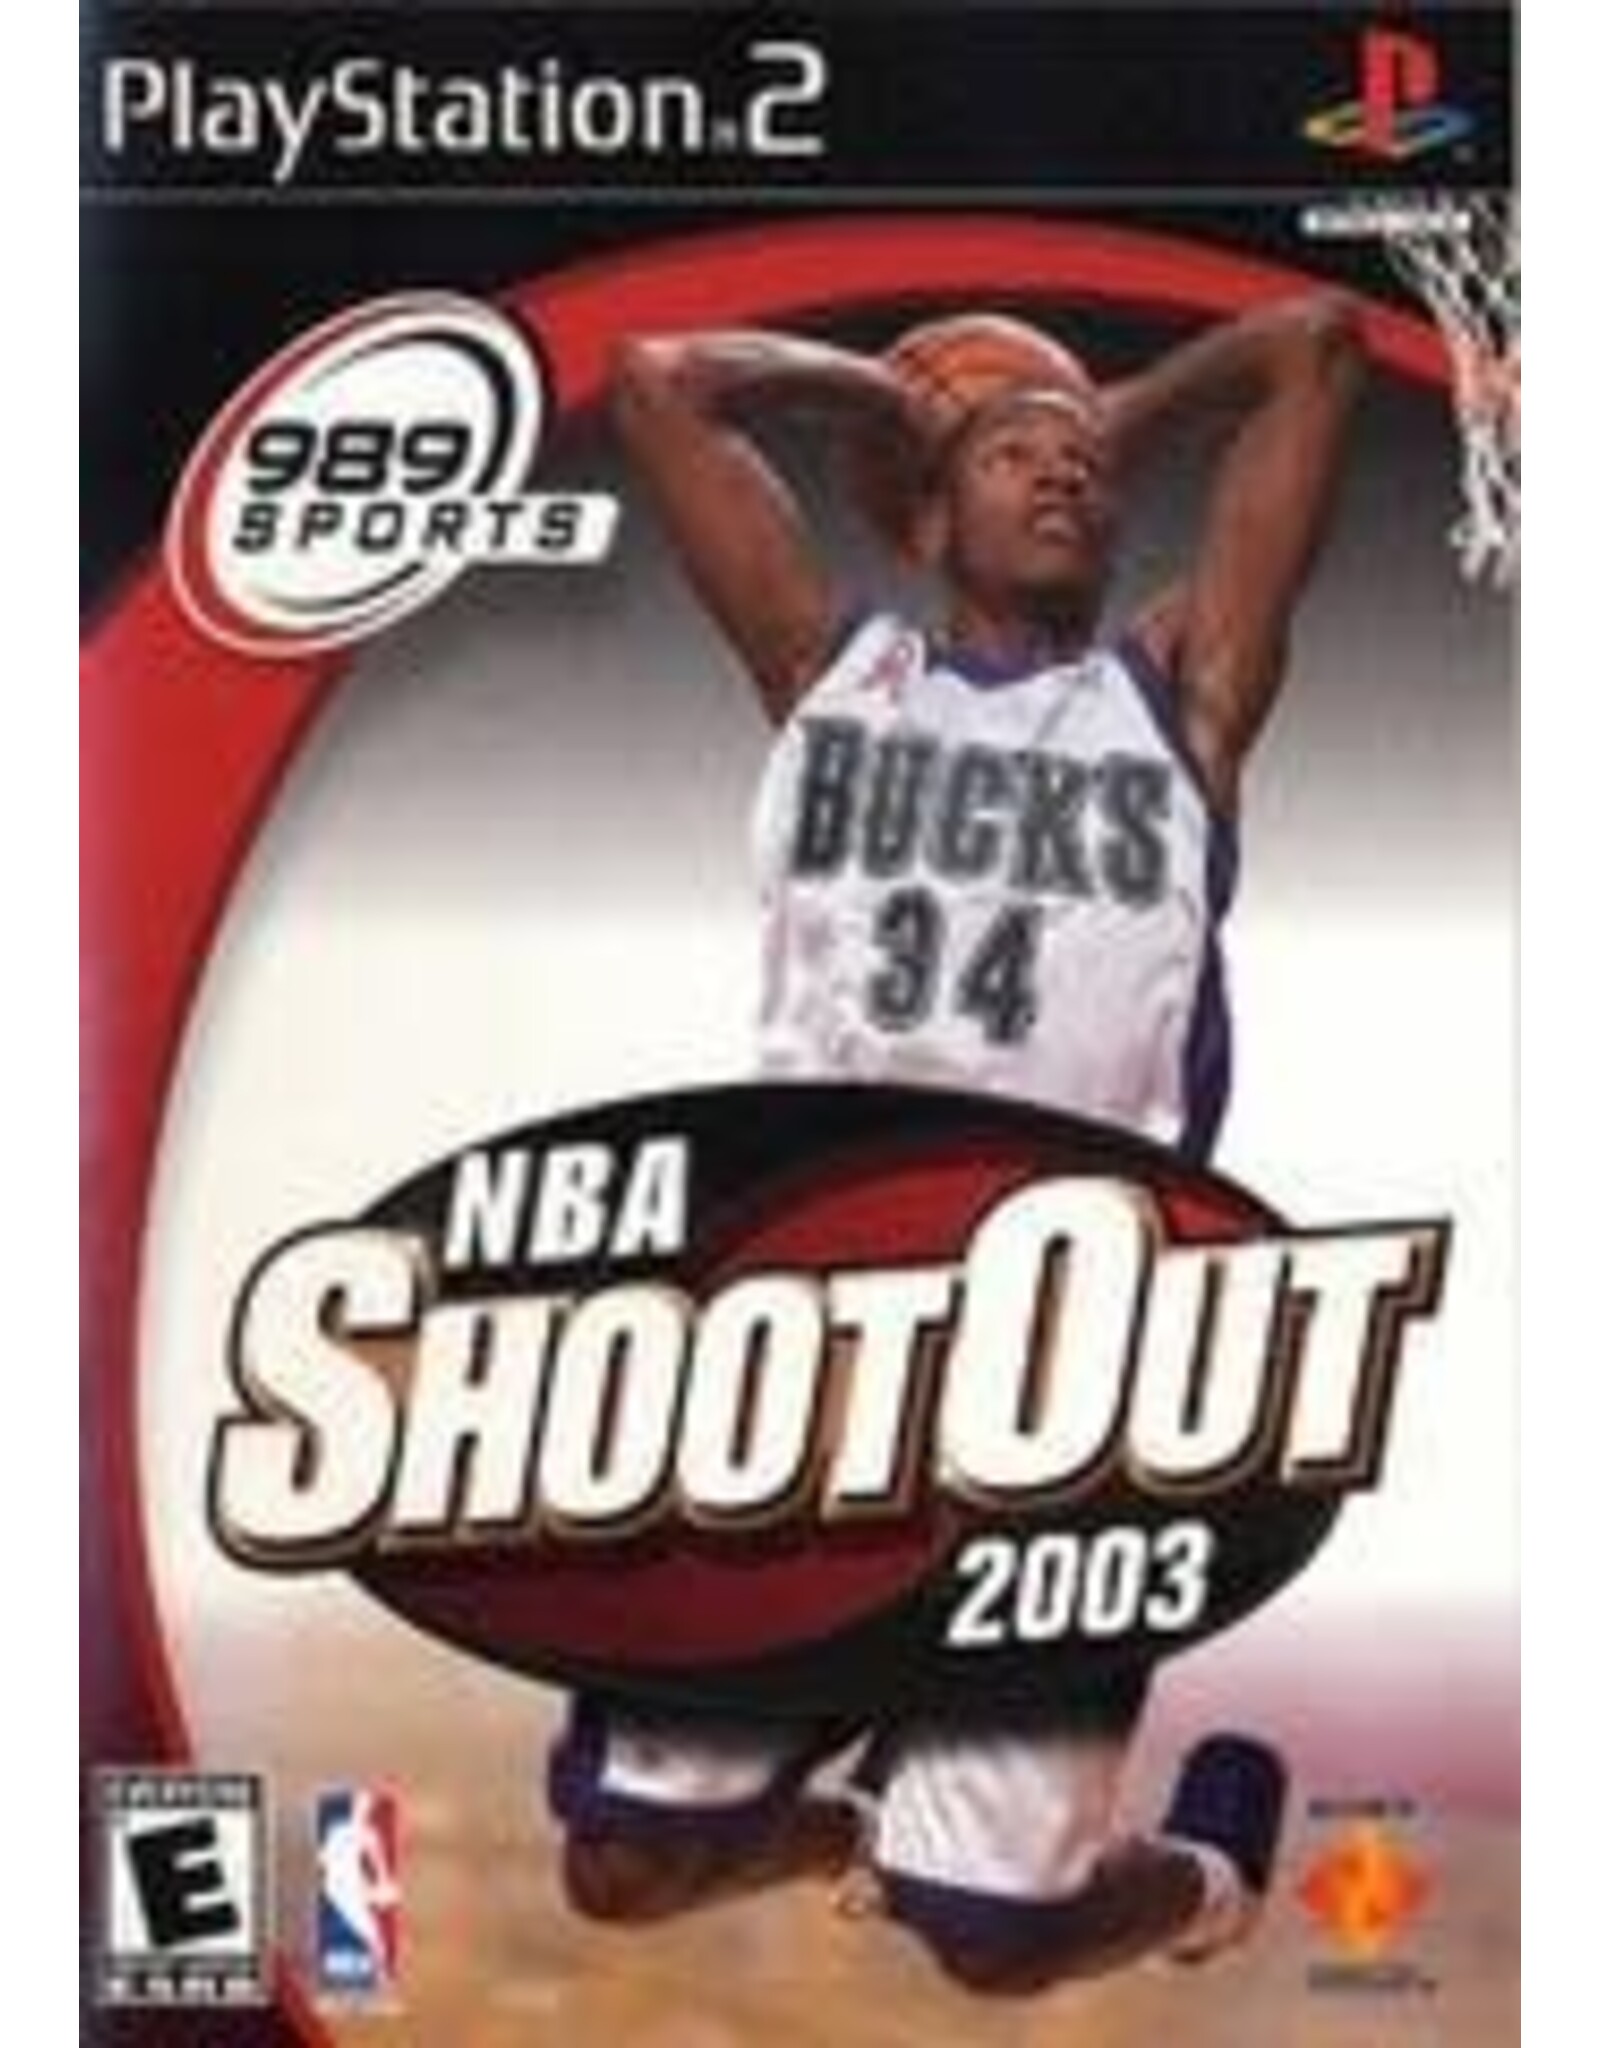 Playstation 2 NBA Shootout 2003 (No Manual, Sticker on Sleeve)